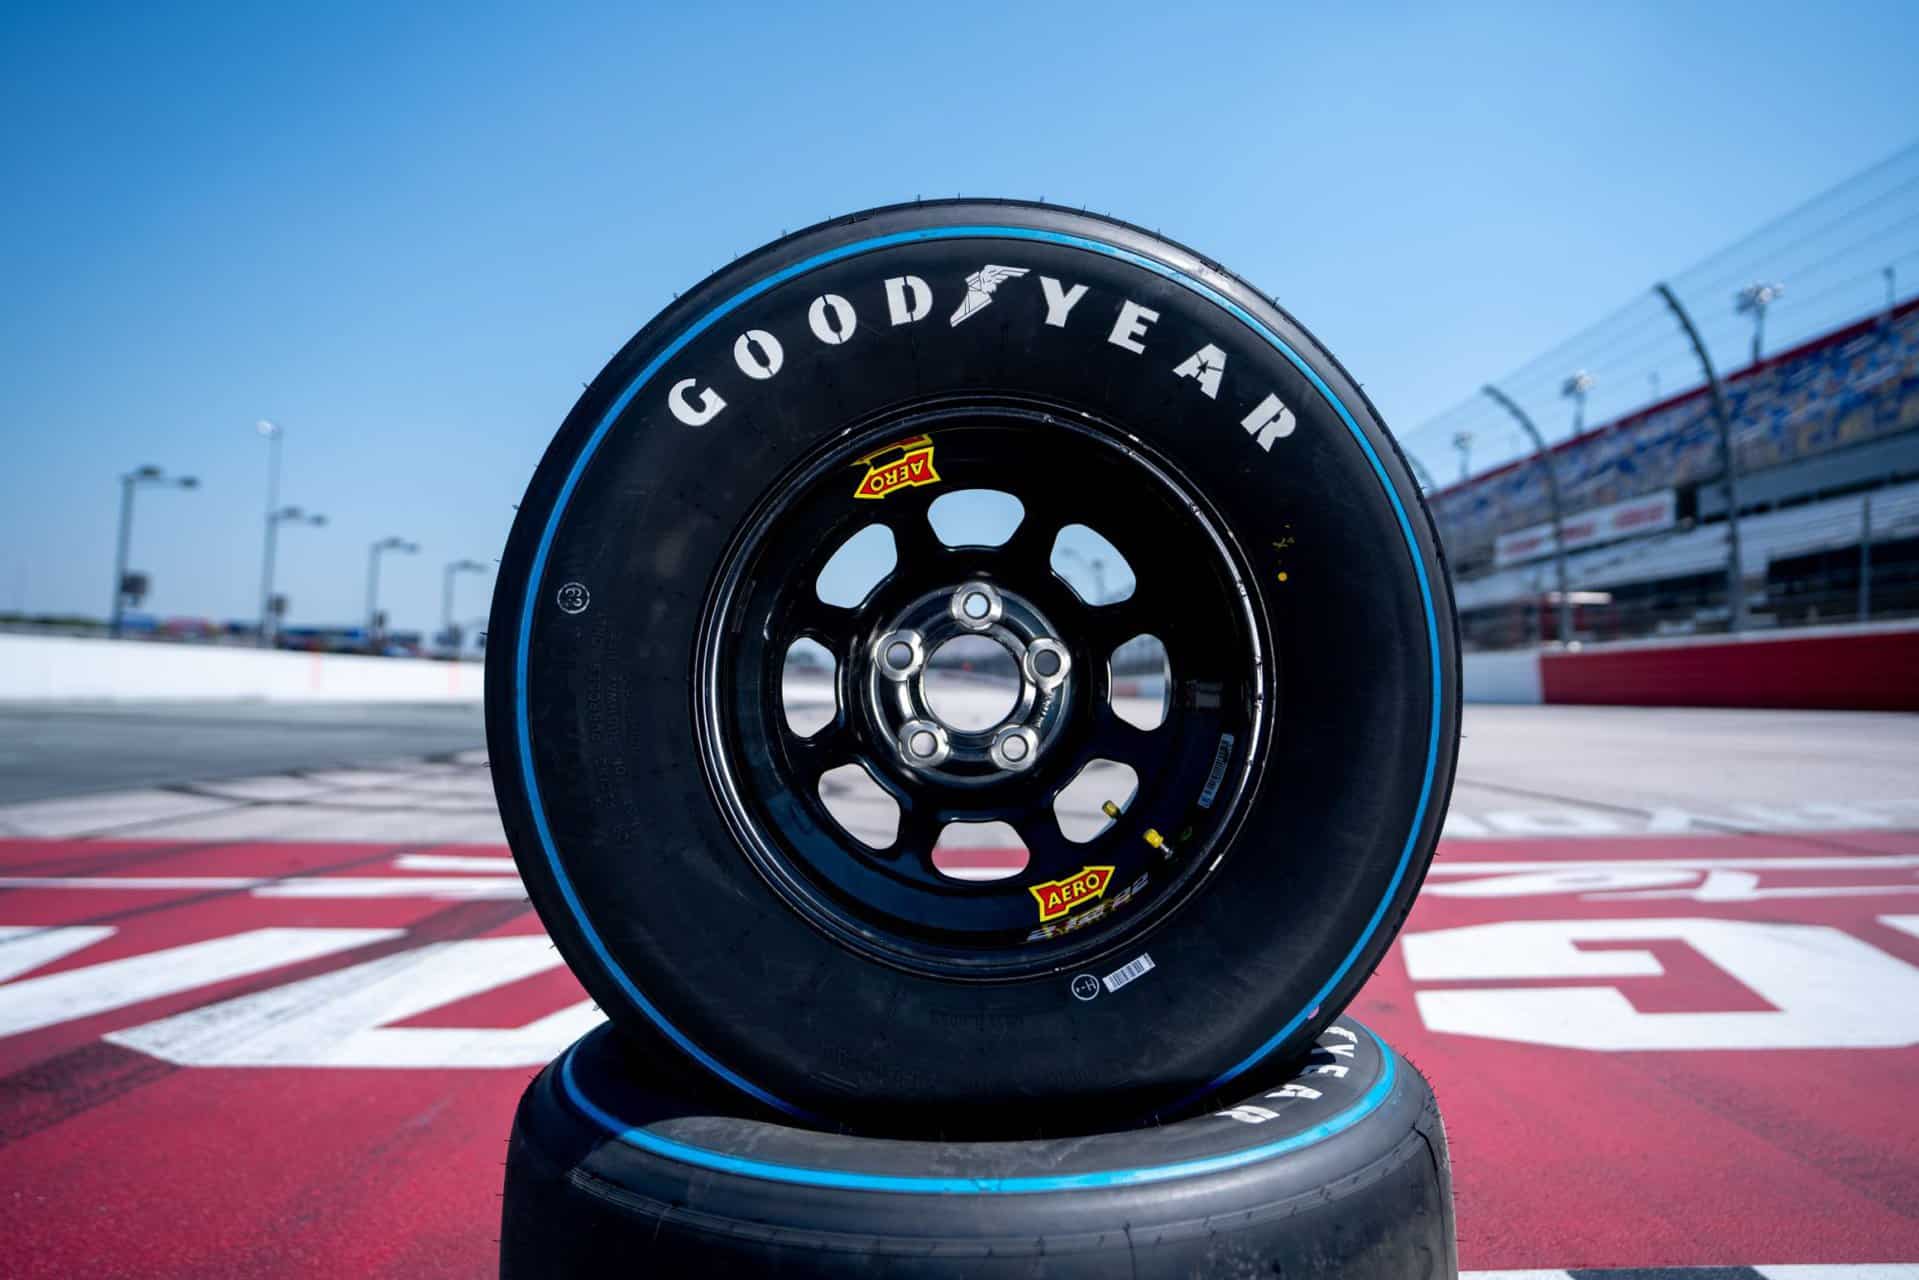 Goodyear bringing retro tyre look to NASCAR - Tyrepress